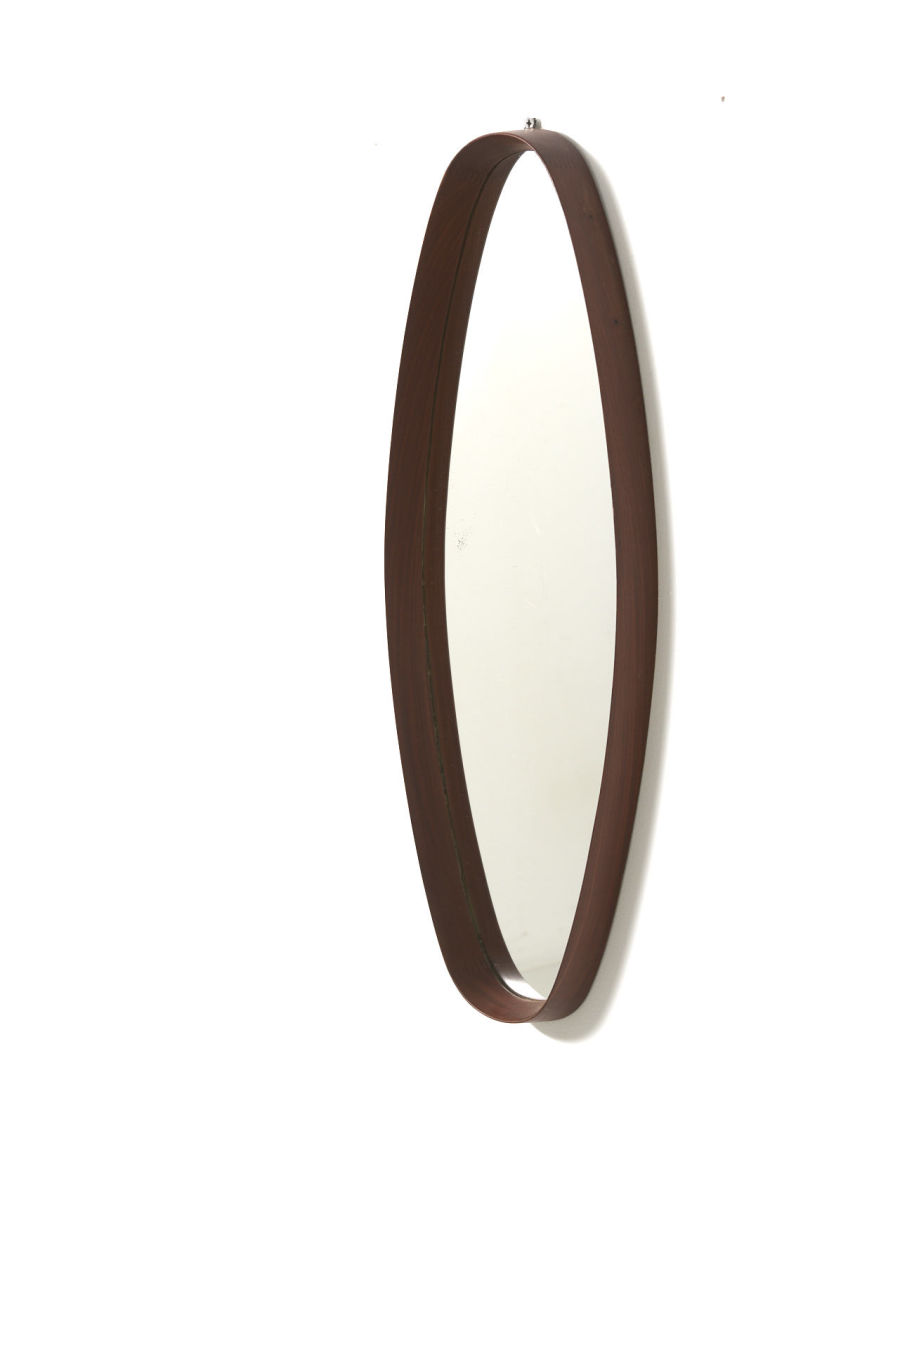 modestfurniture-vintage-2523-oval-mirror-teak01